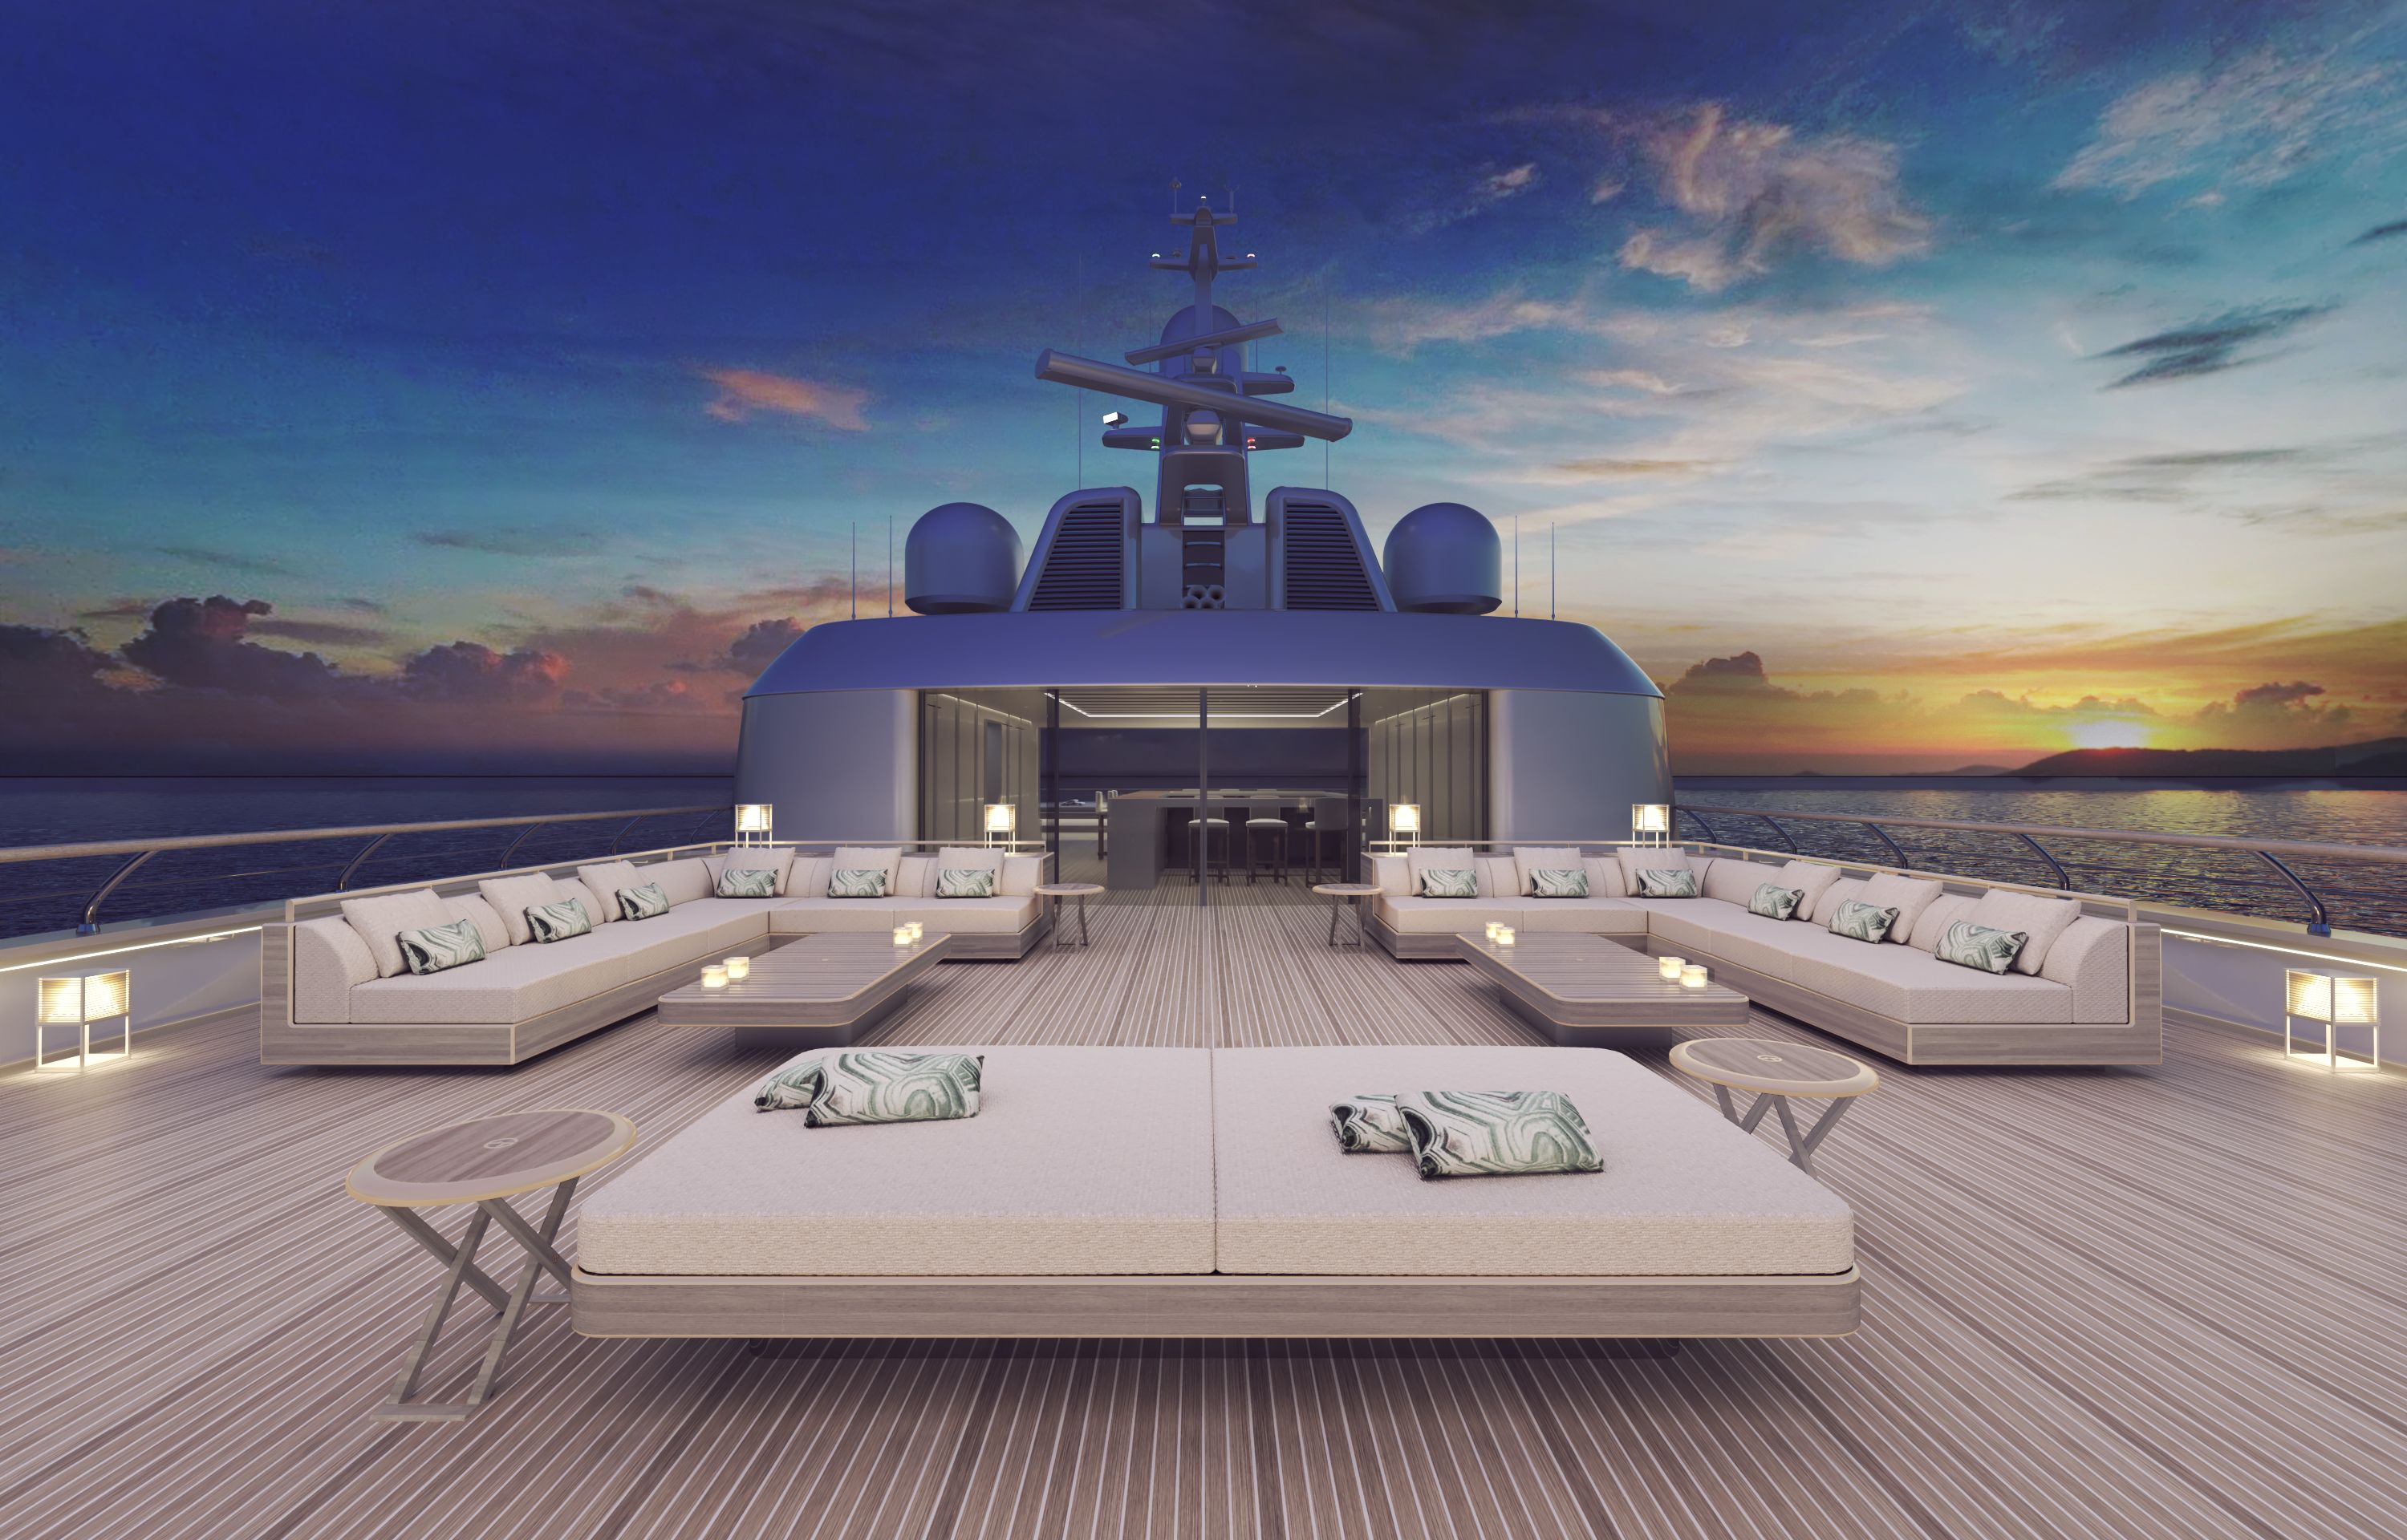 Giorgio Armani Has Designed an Exquisite Superyacht